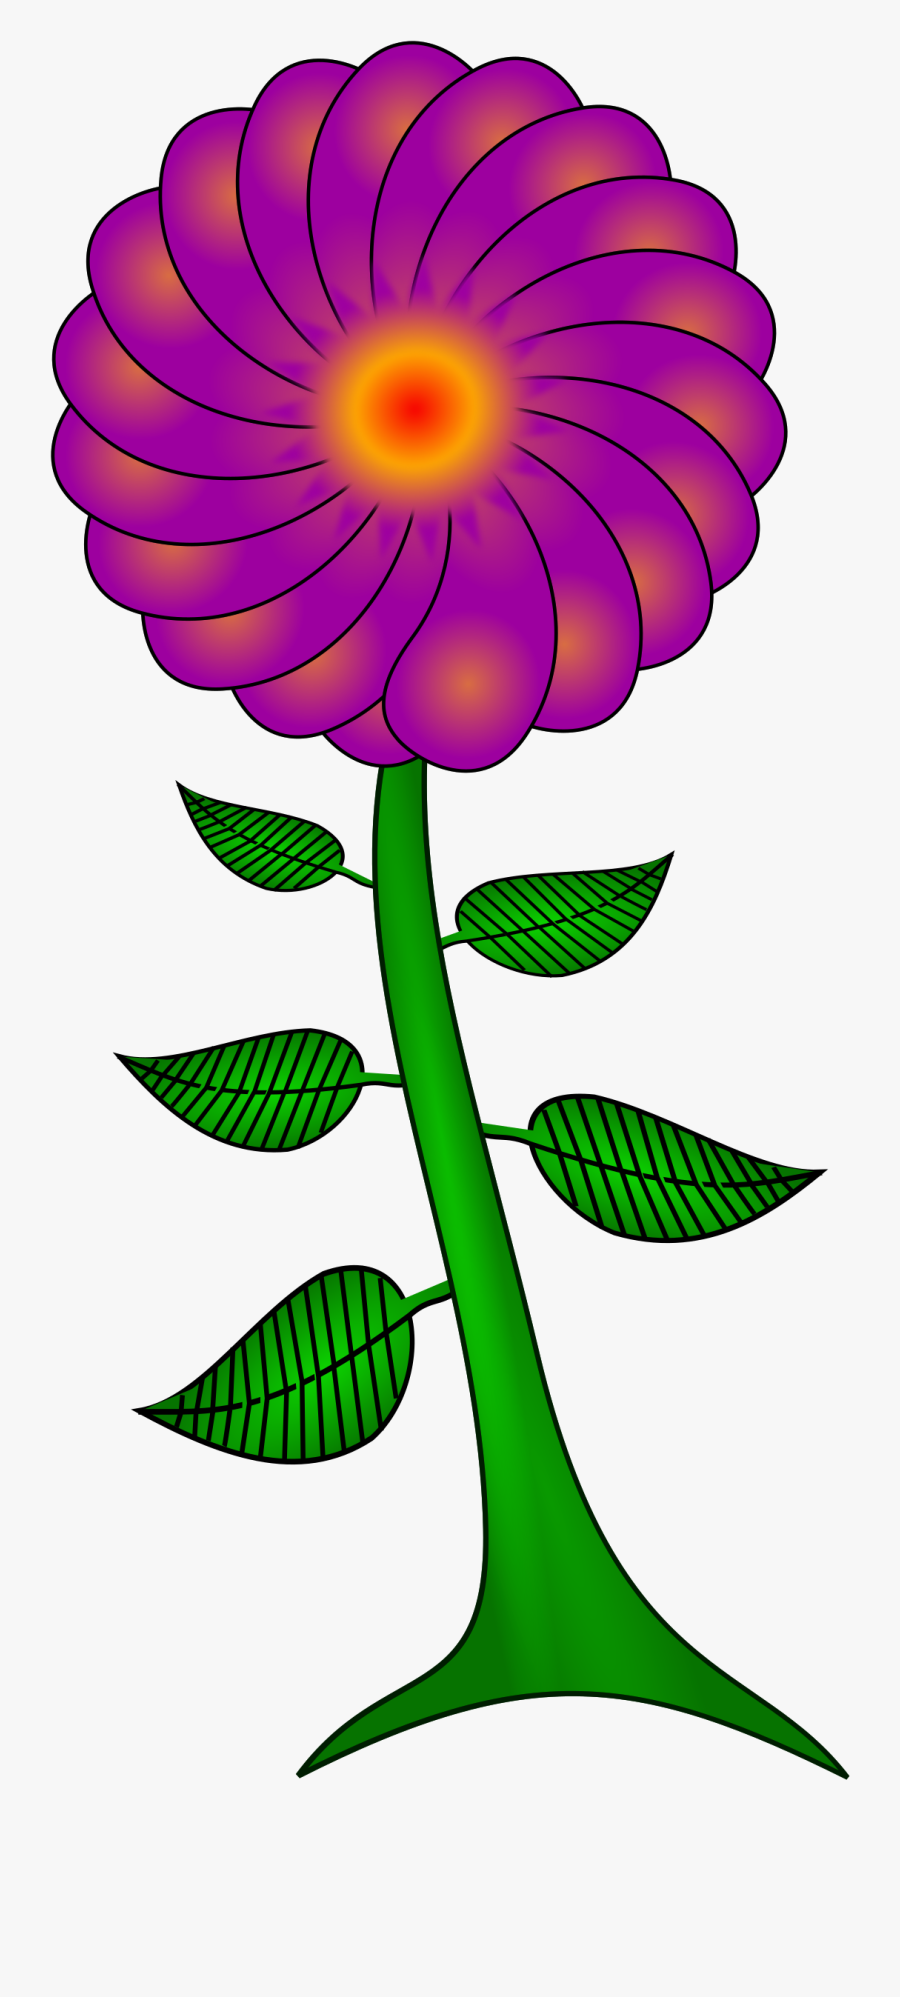 Transparent Flower With Stem Png - Flower, Transparent Clipart